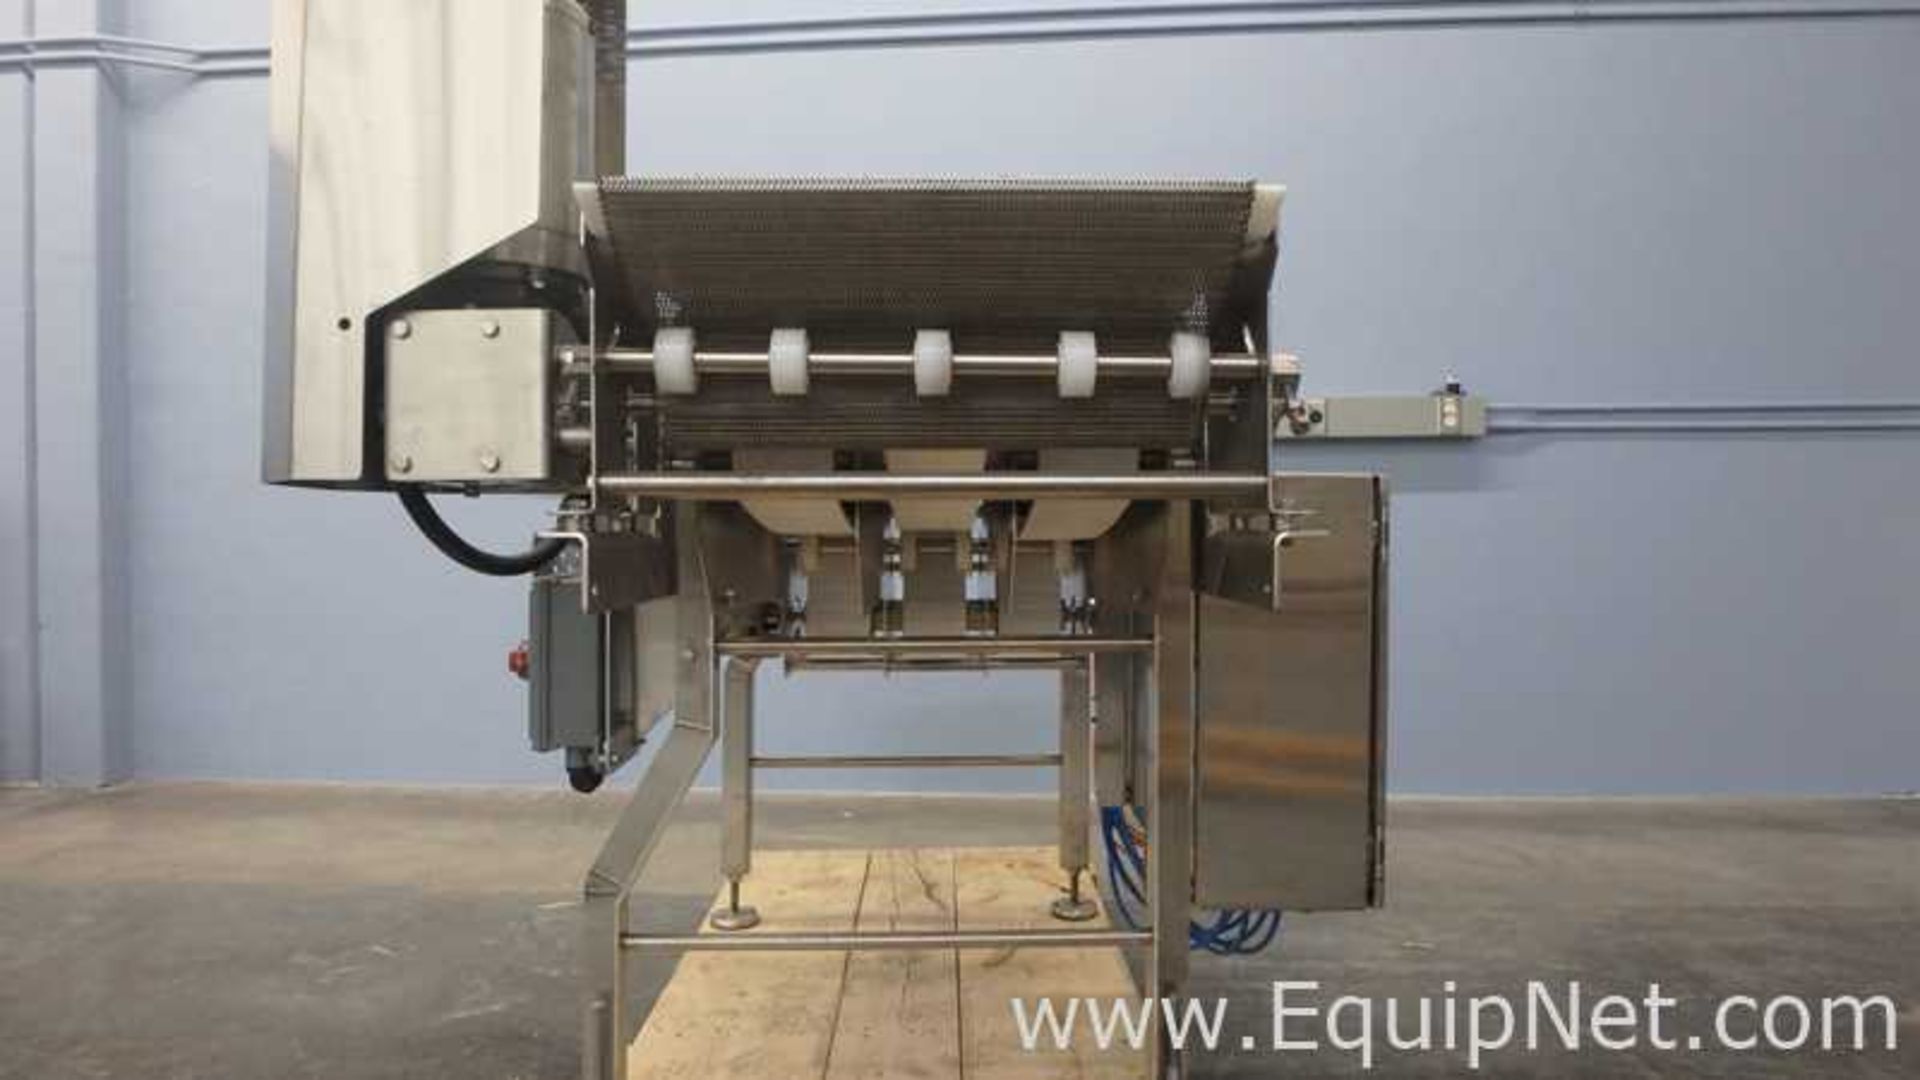 KleenLine Engineered Stainless Steel Conveyor Designed for Full Washdown - Image 16 of 30